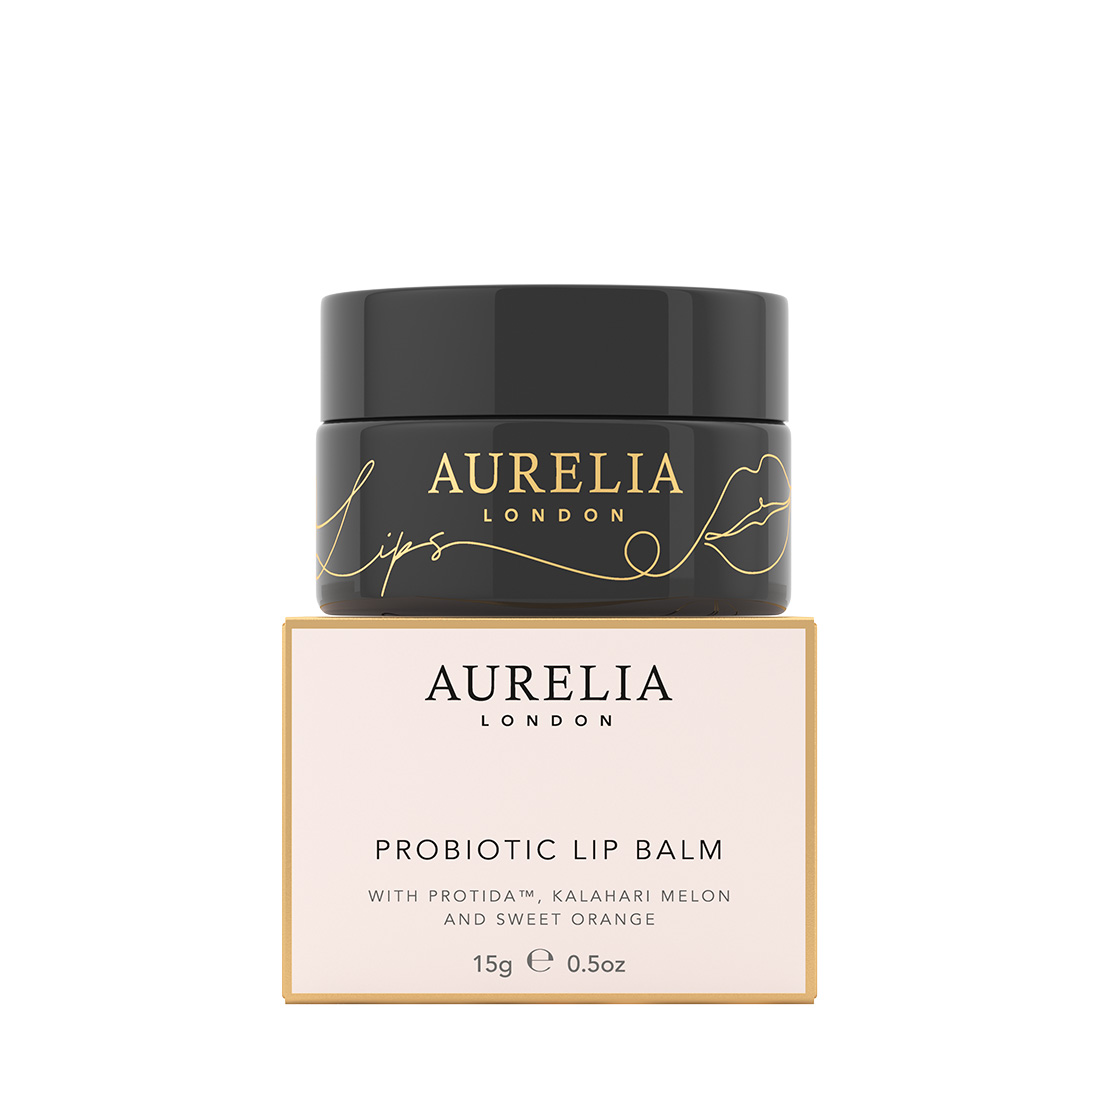 An image of Aurelia London, Probiotic Lip Balm, 15ml